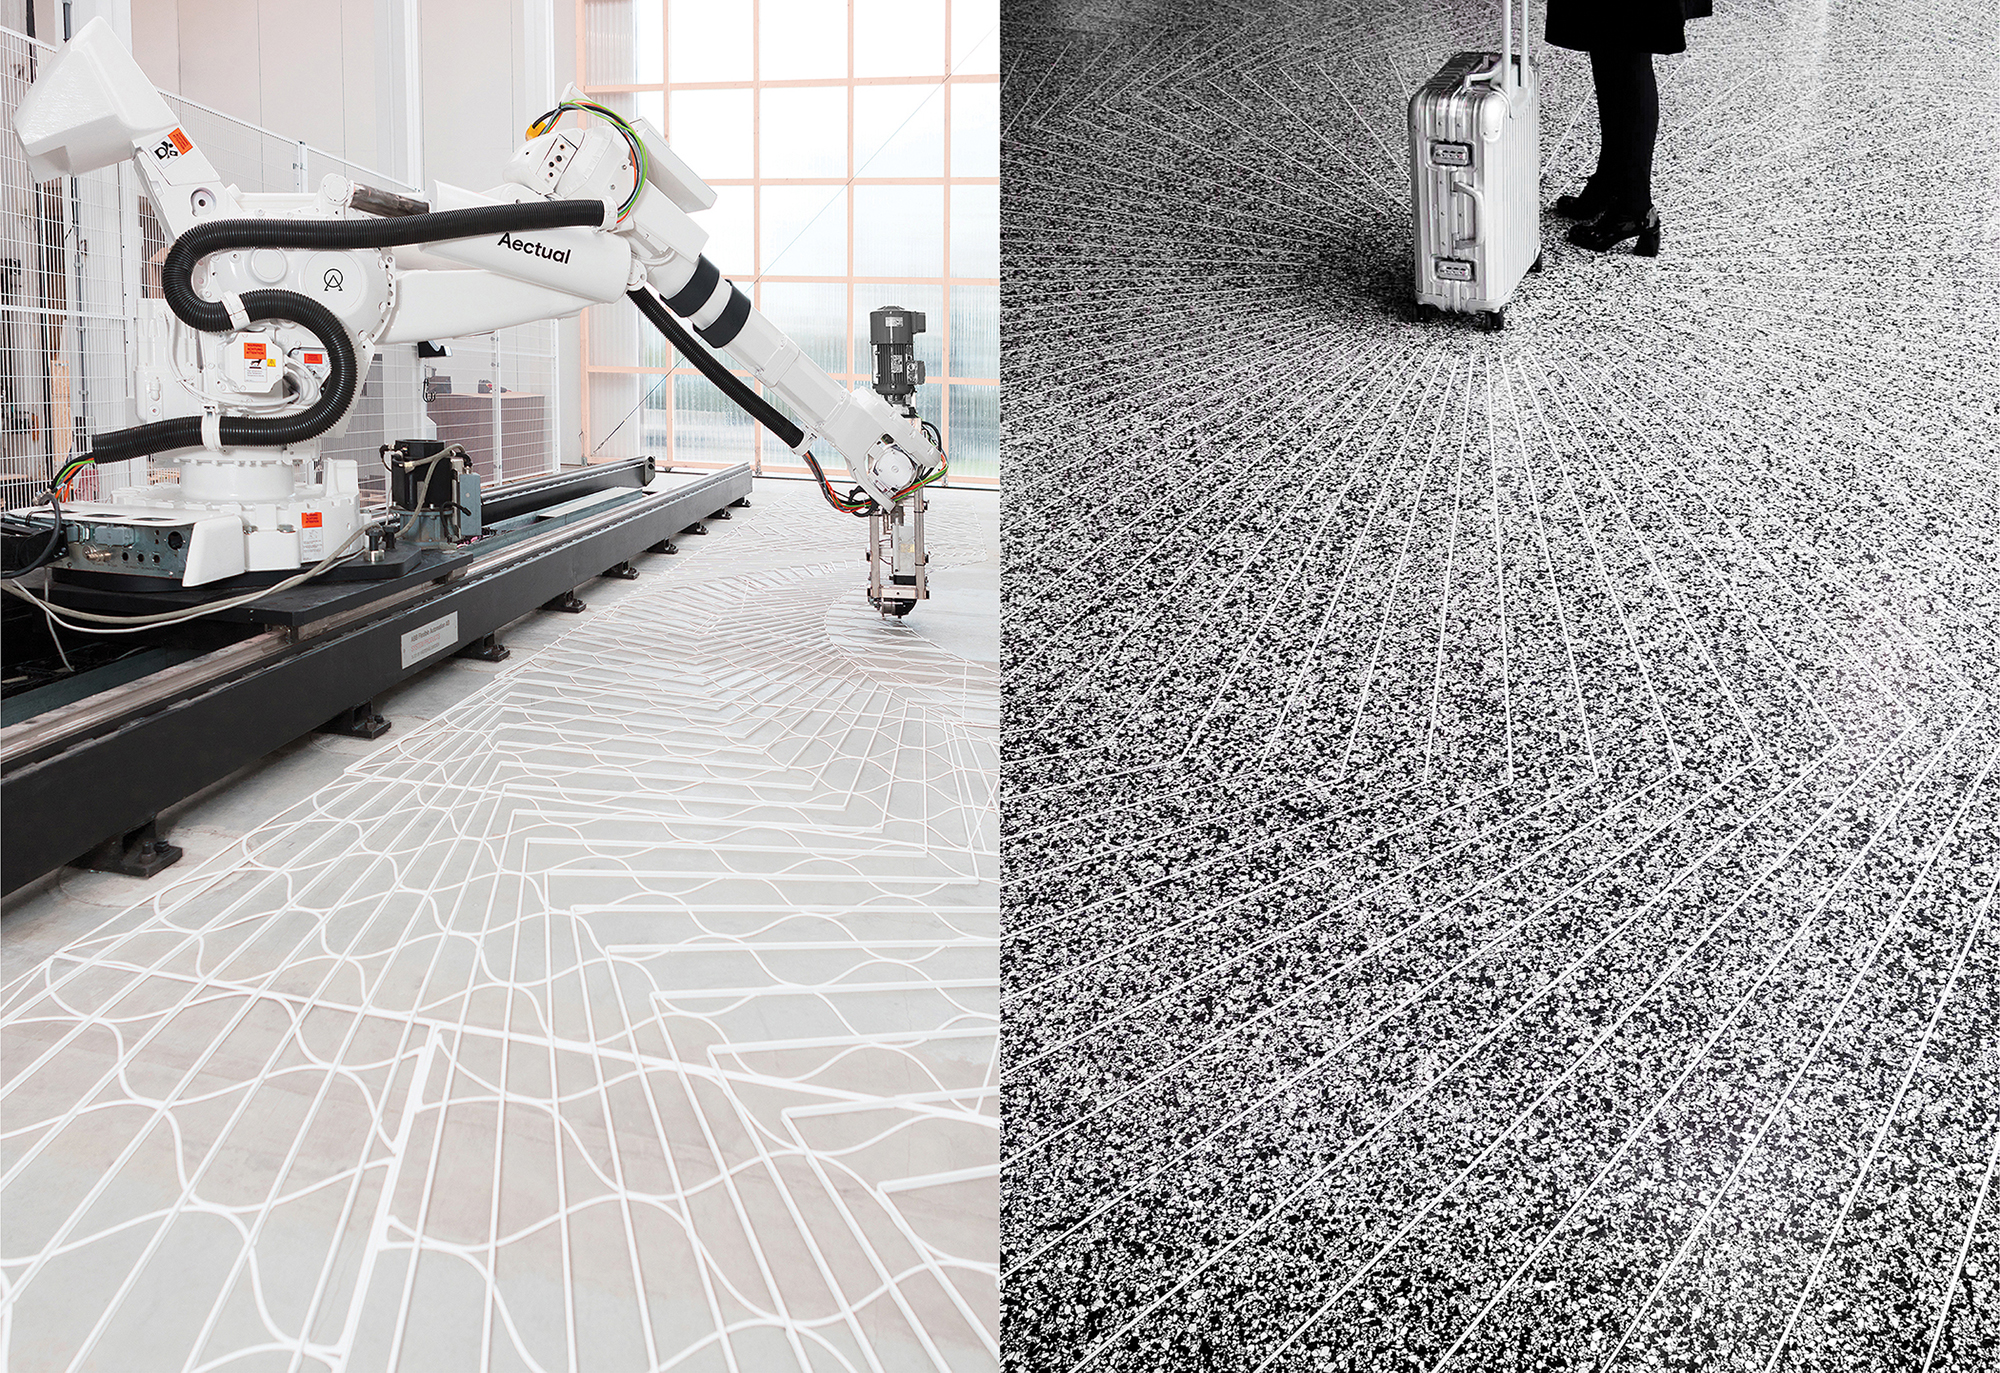 Aectual XL 3D-printed robot - Amsterdam Schiphol International Airport flooring